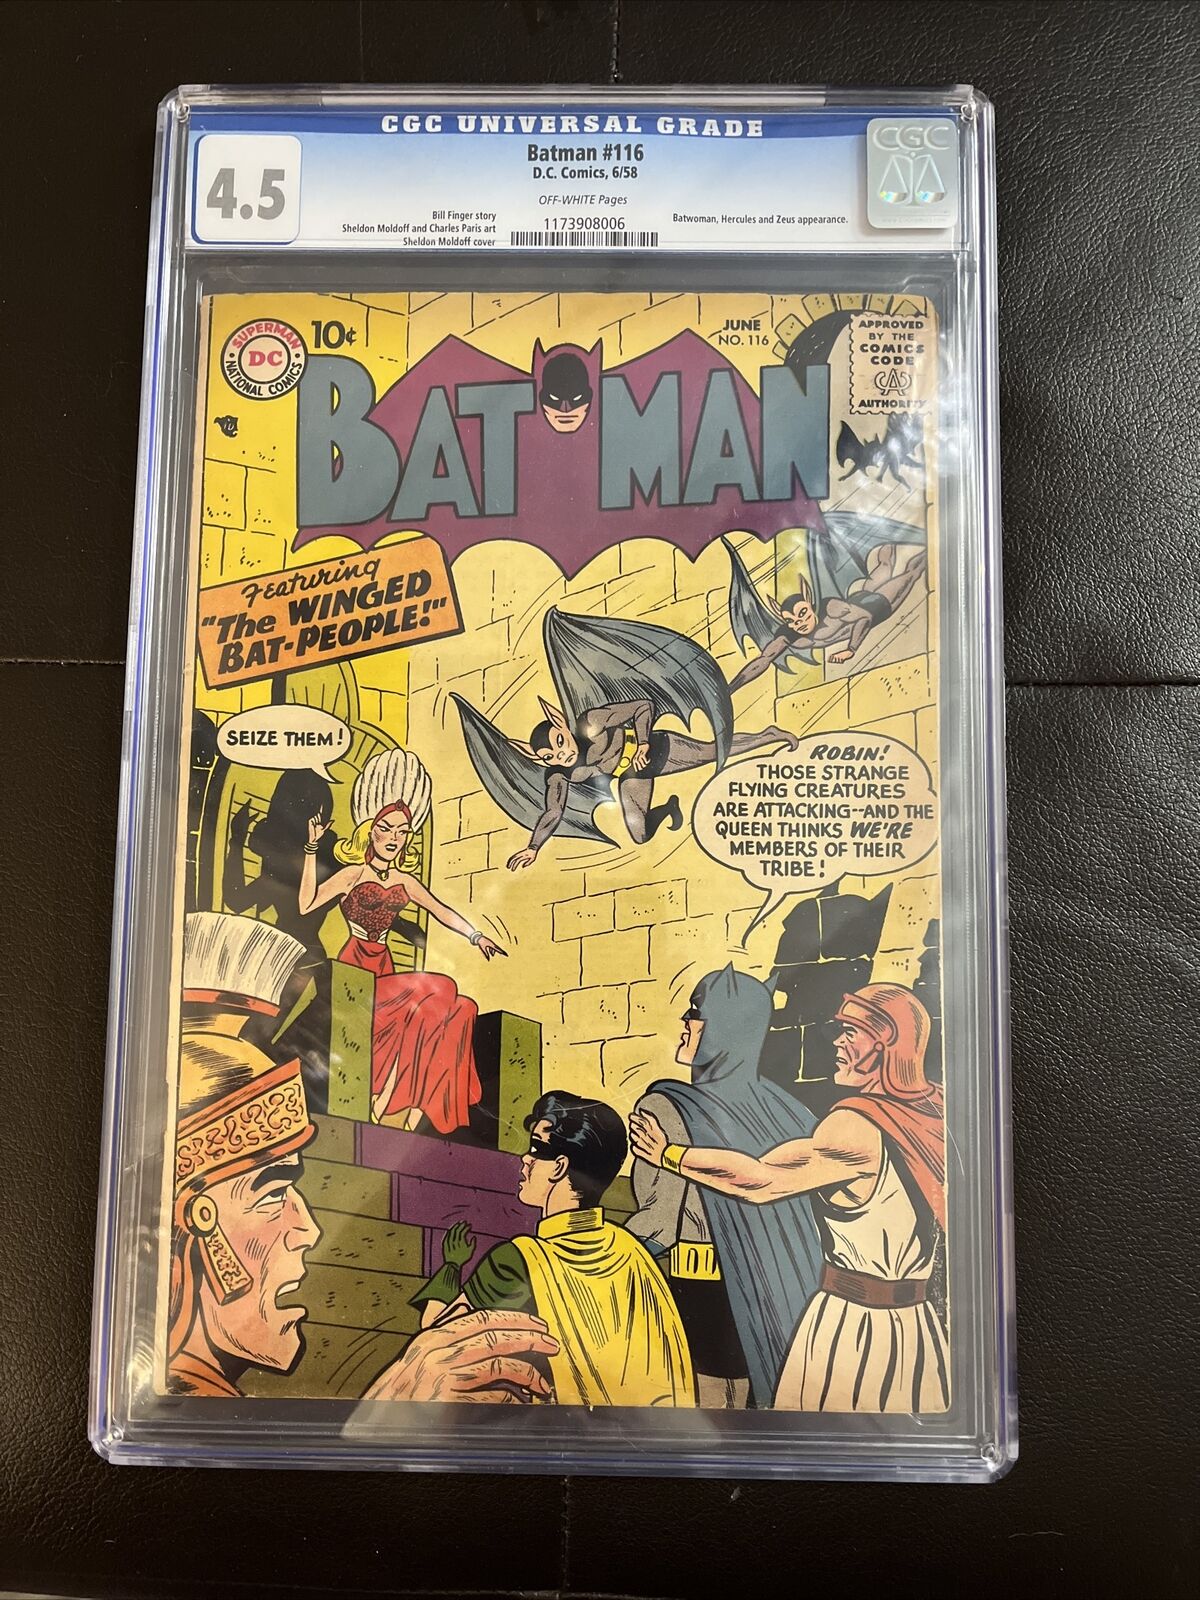 BATMAN #116 CGC 4.5 June 1958 Silver Age “The Winged Bat-People\